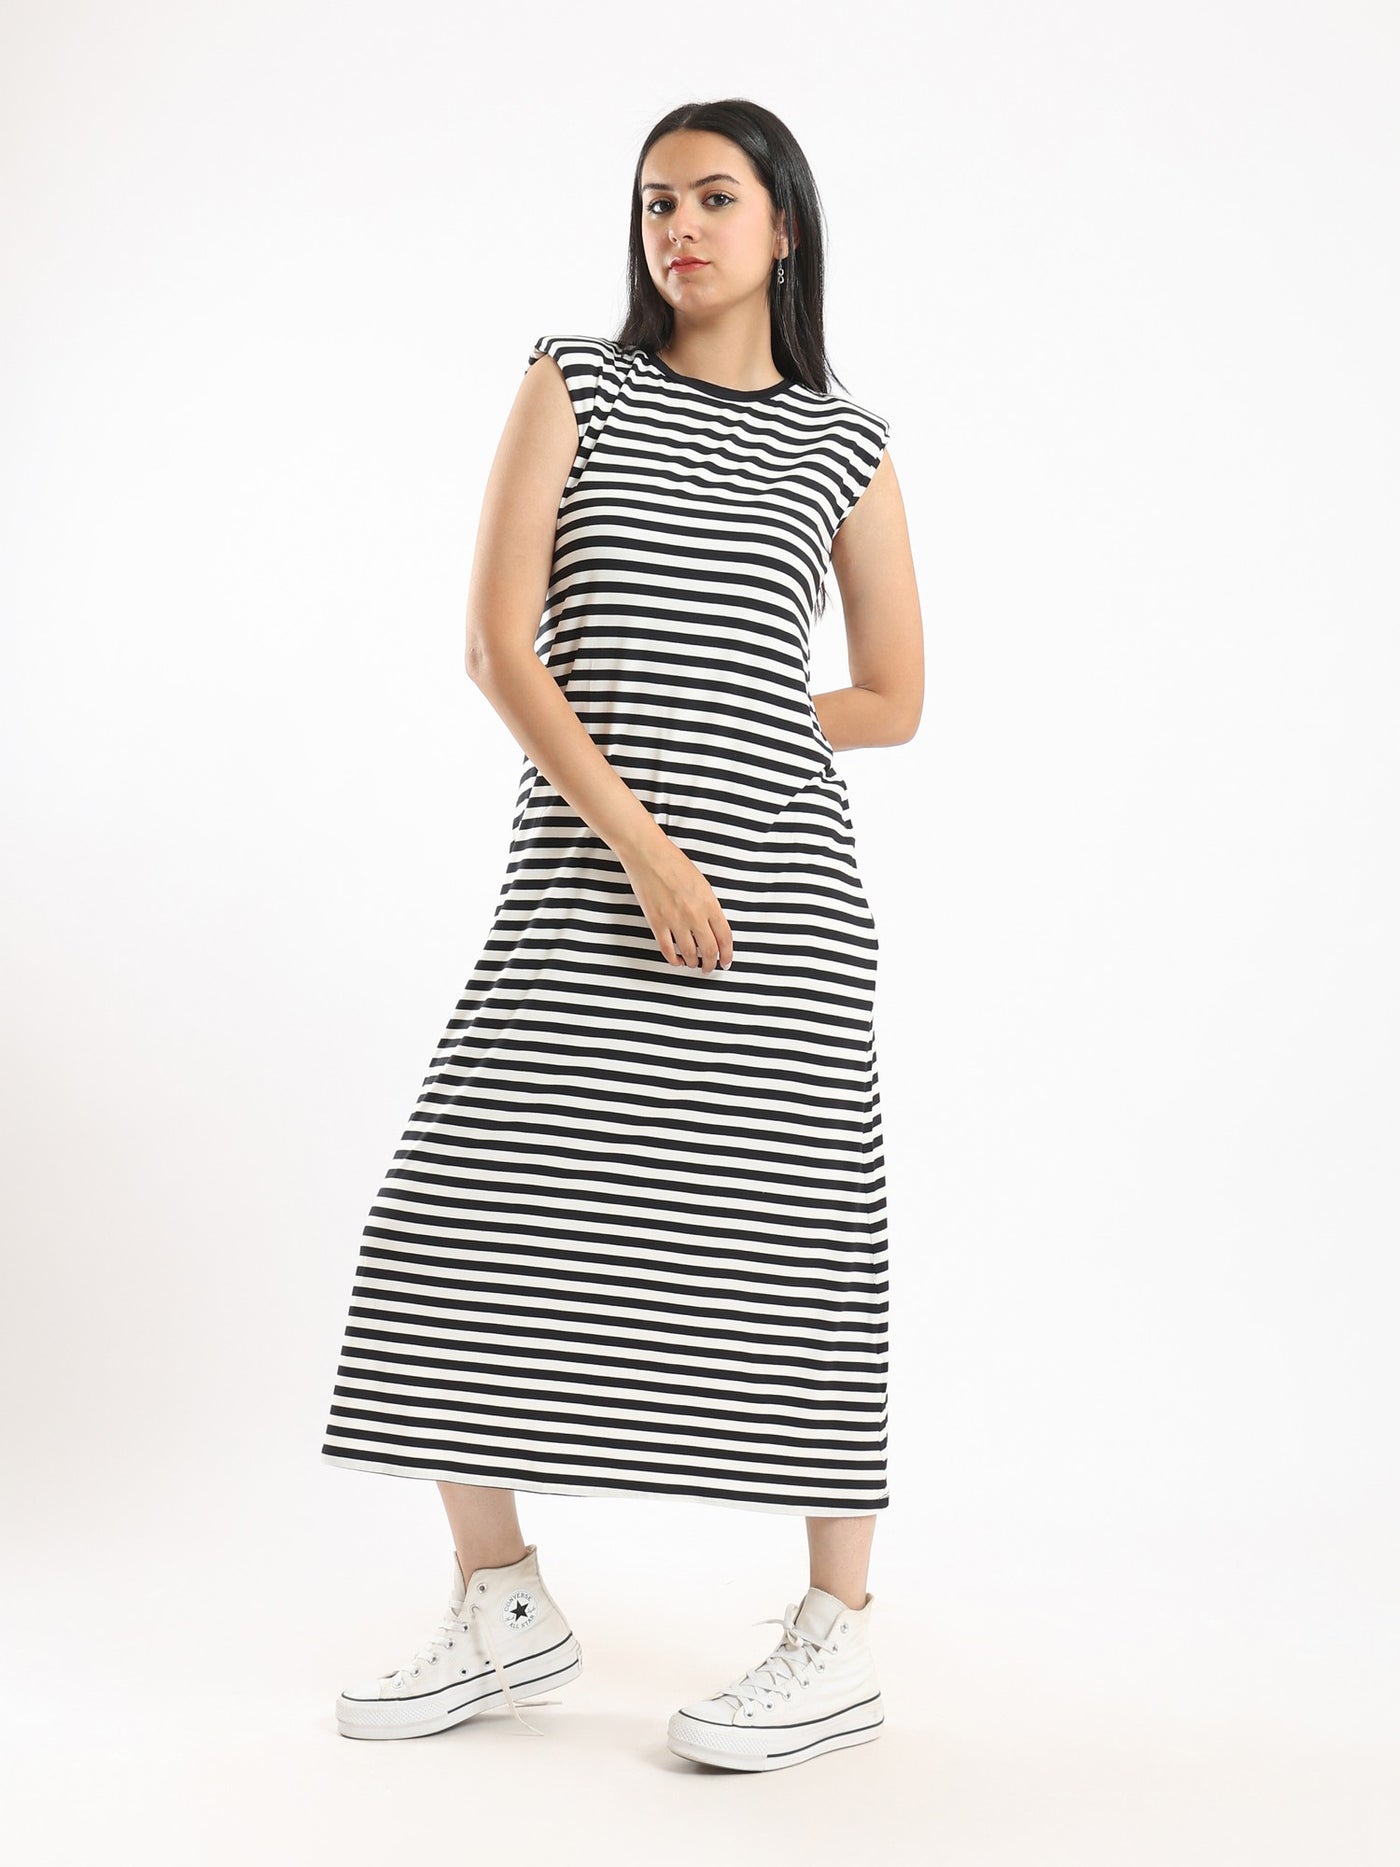 Dress - Sleeveless - Striped